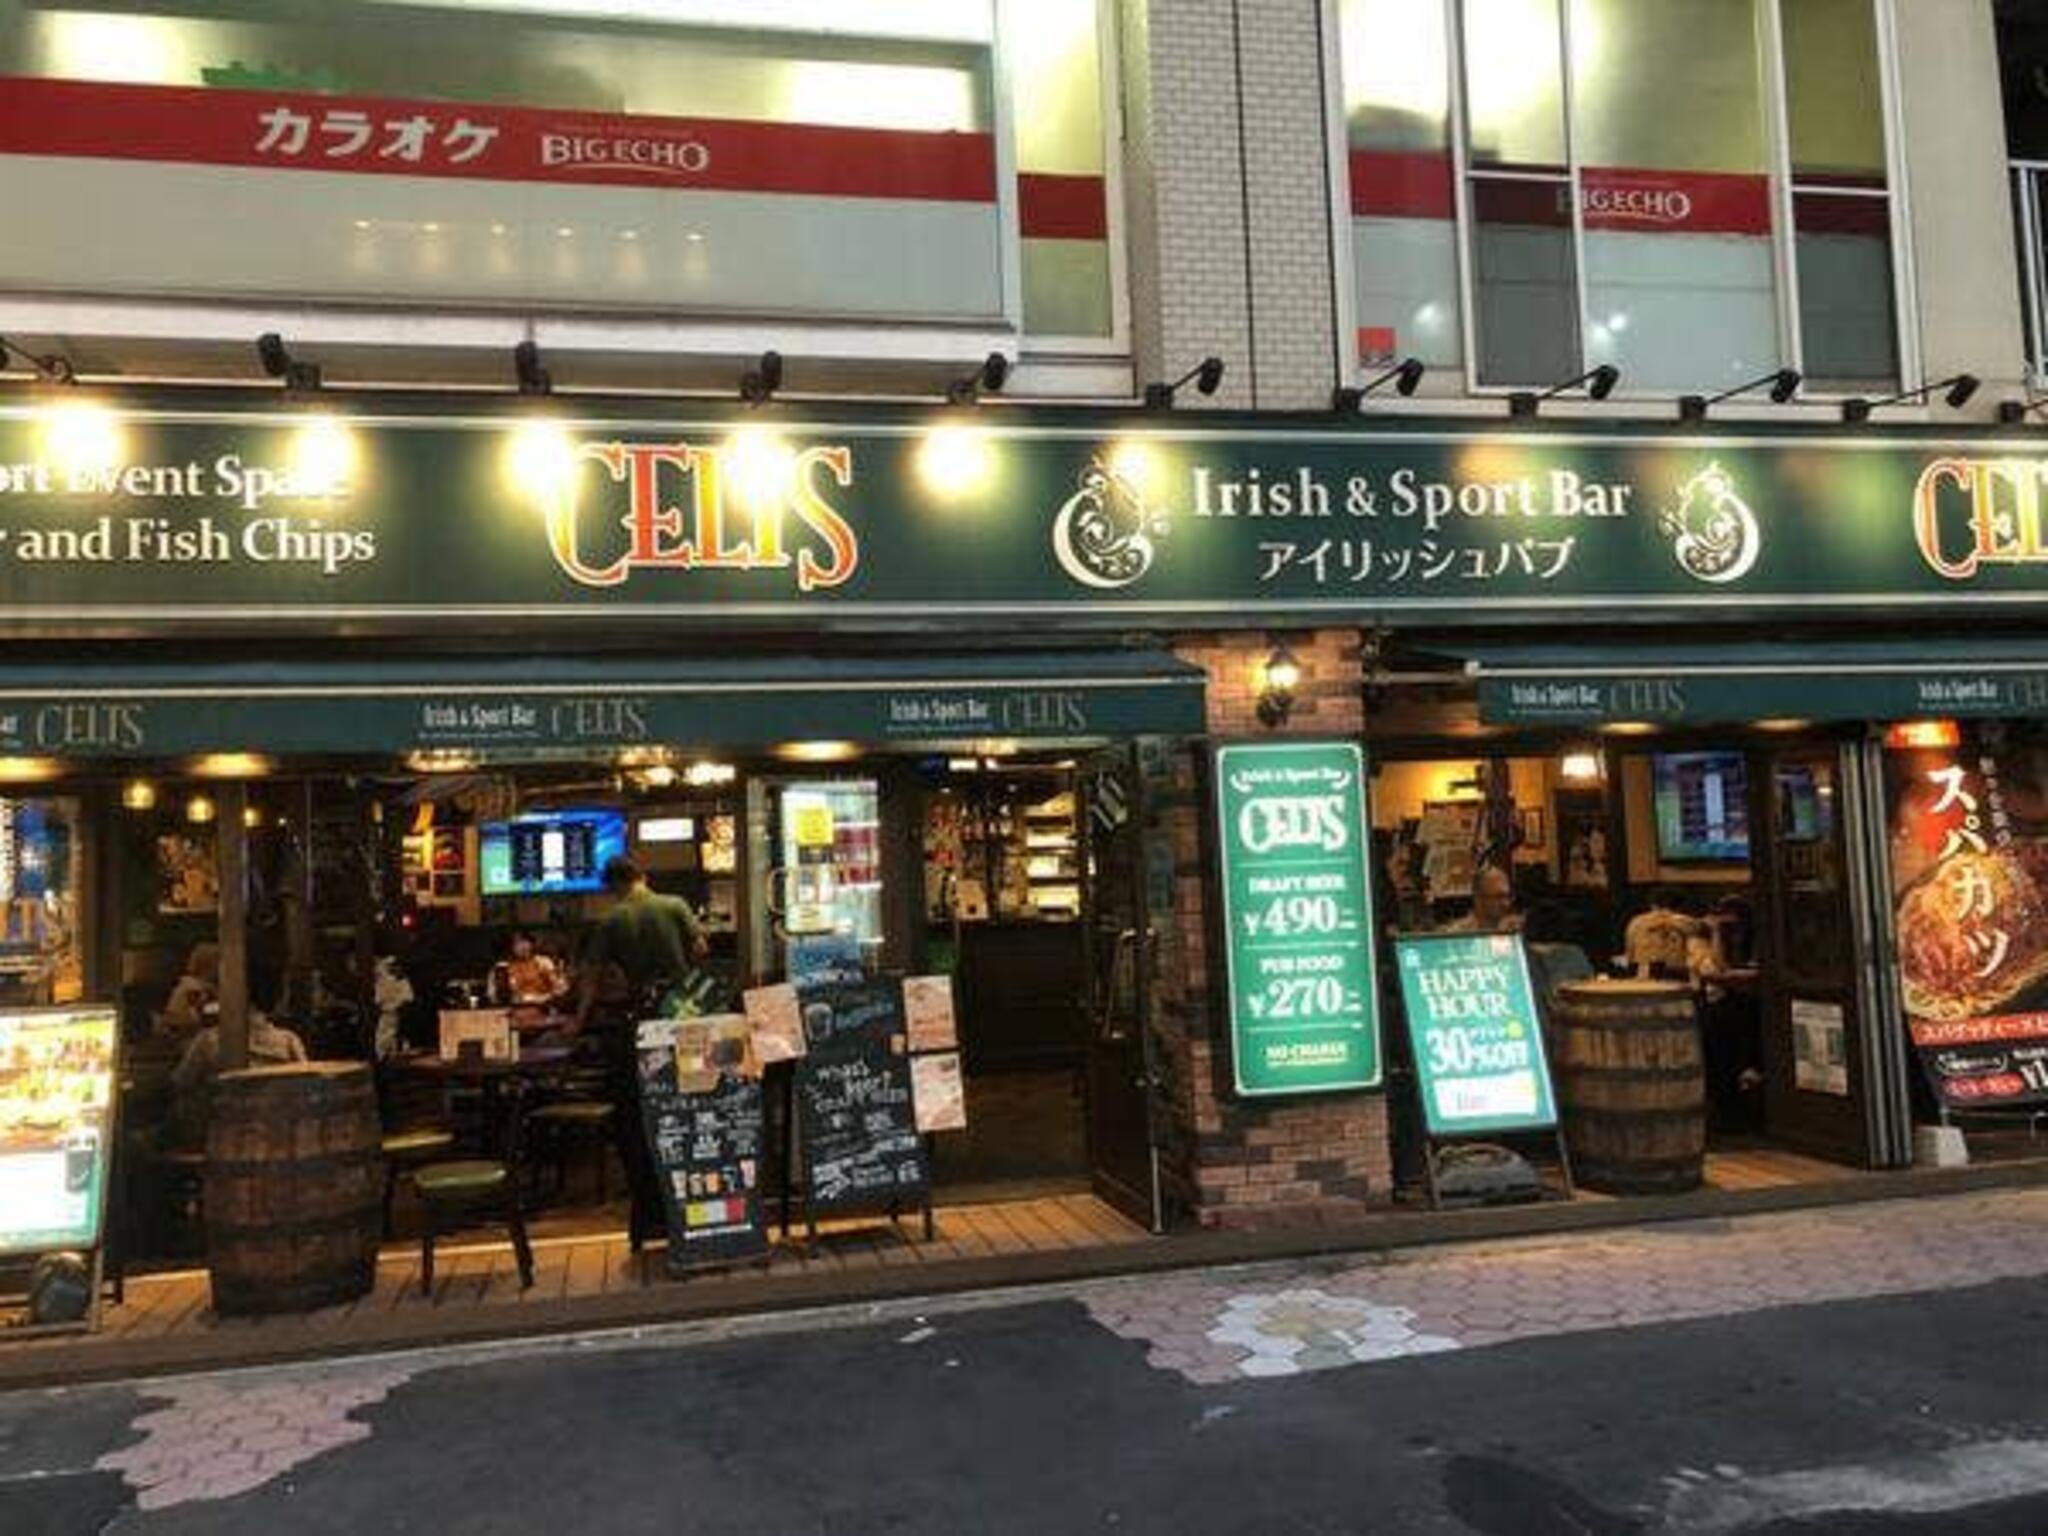 IRISH PUB CELTS 松本駅前店の代表写真9